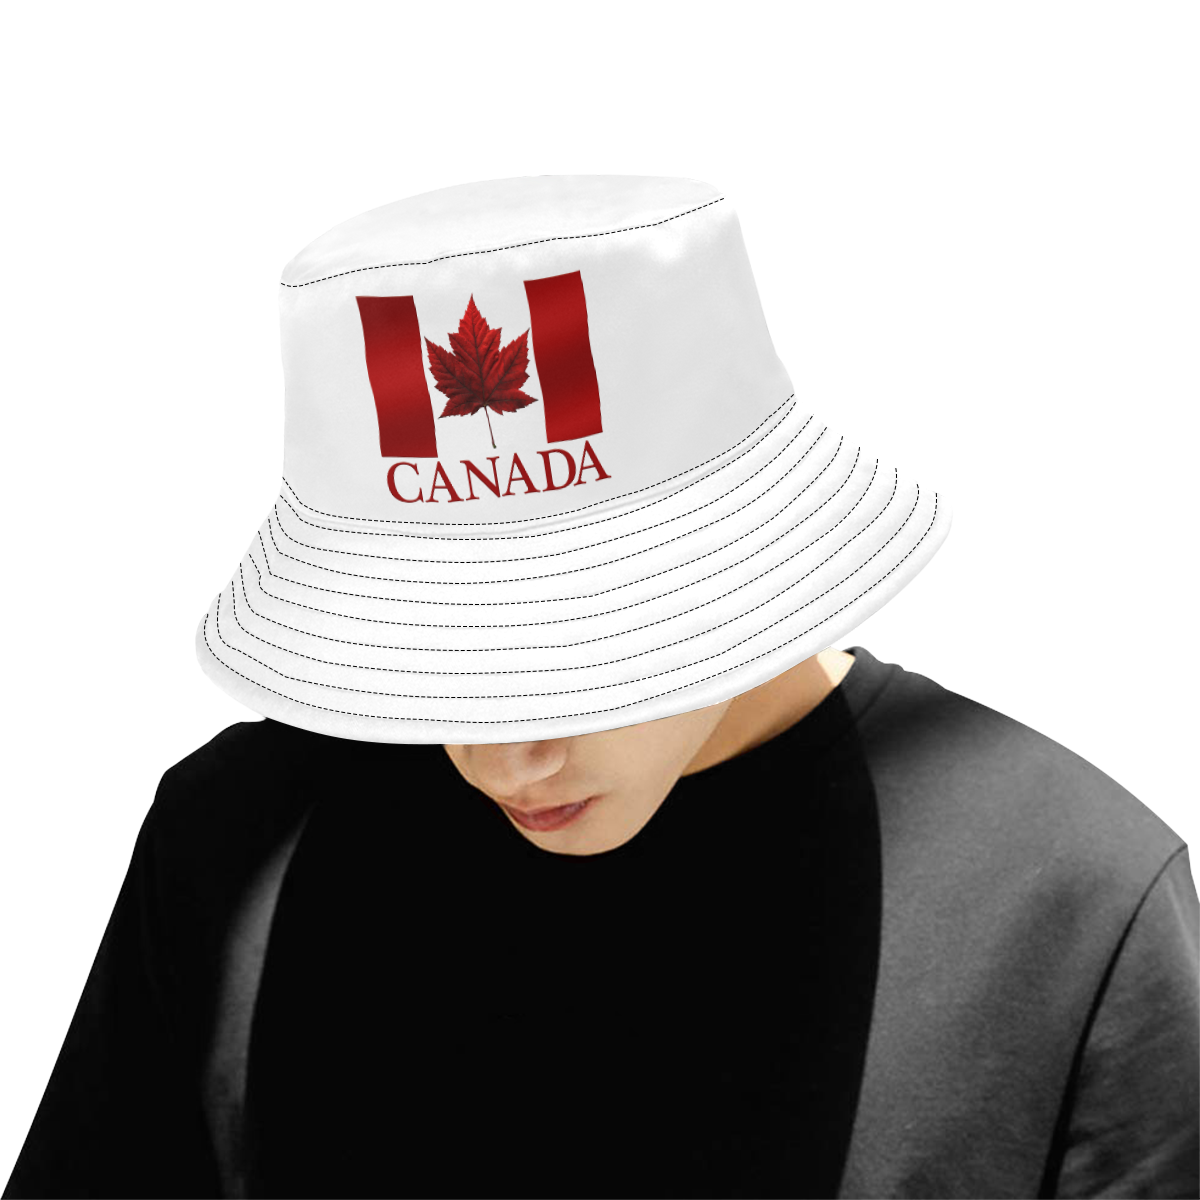 Canada Flag Souvenir Bucket Hats All Over Print Bucket Hat for Men